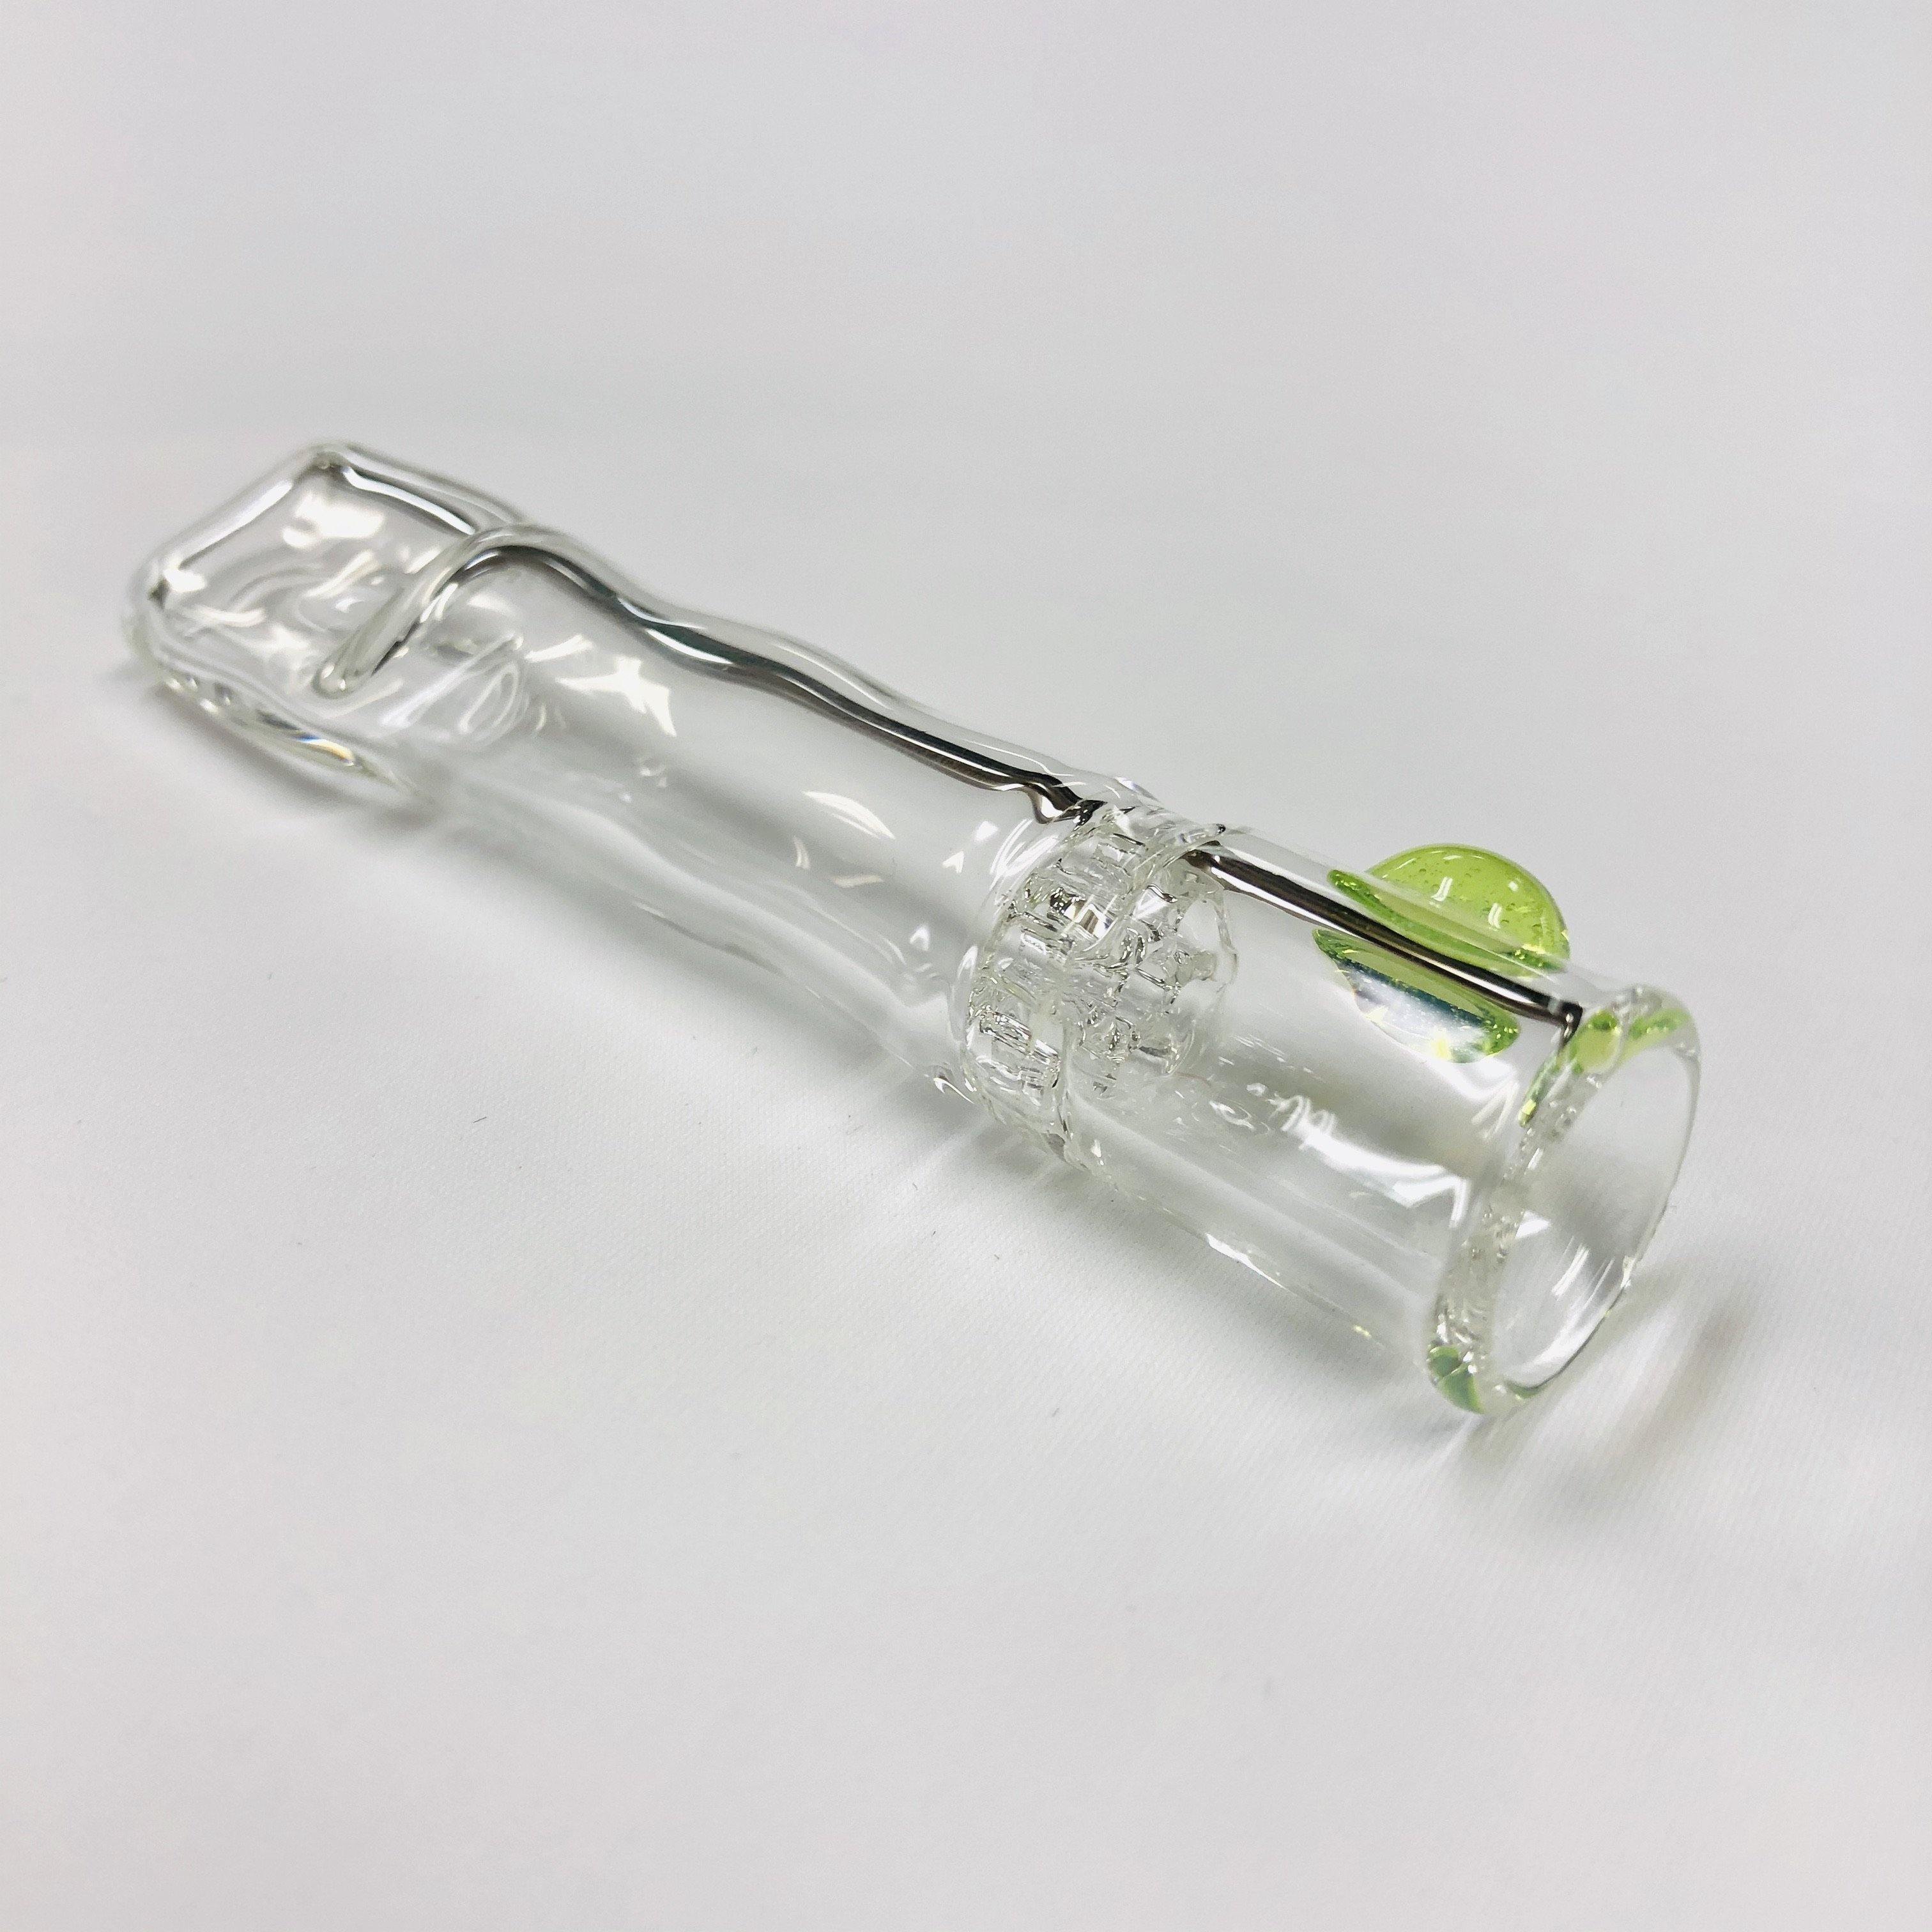 Honeycomb Glass Screens  Seed & Stone - Songhees Cannabis